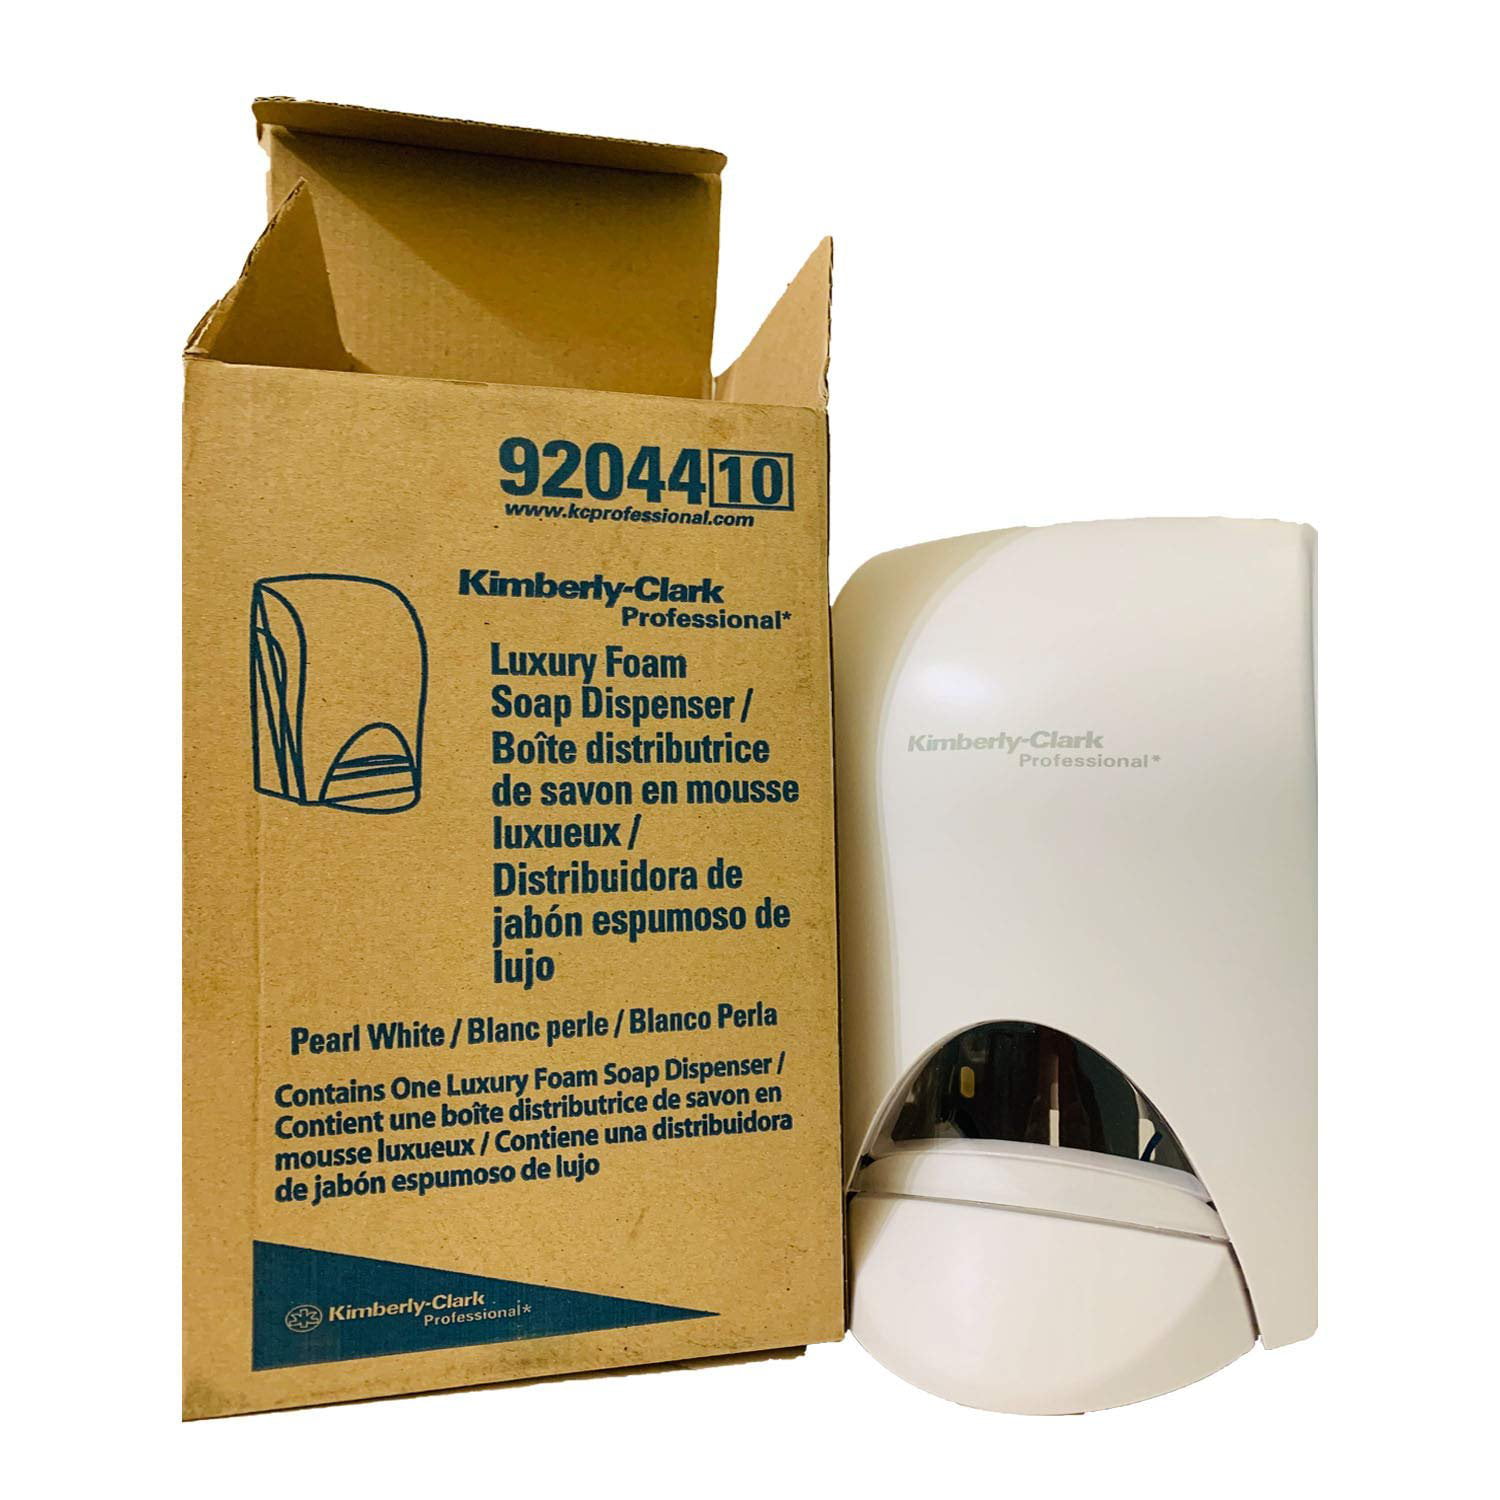 Kimberly-Clark Professional 800ml Luxury Foam Soap Dispenser 